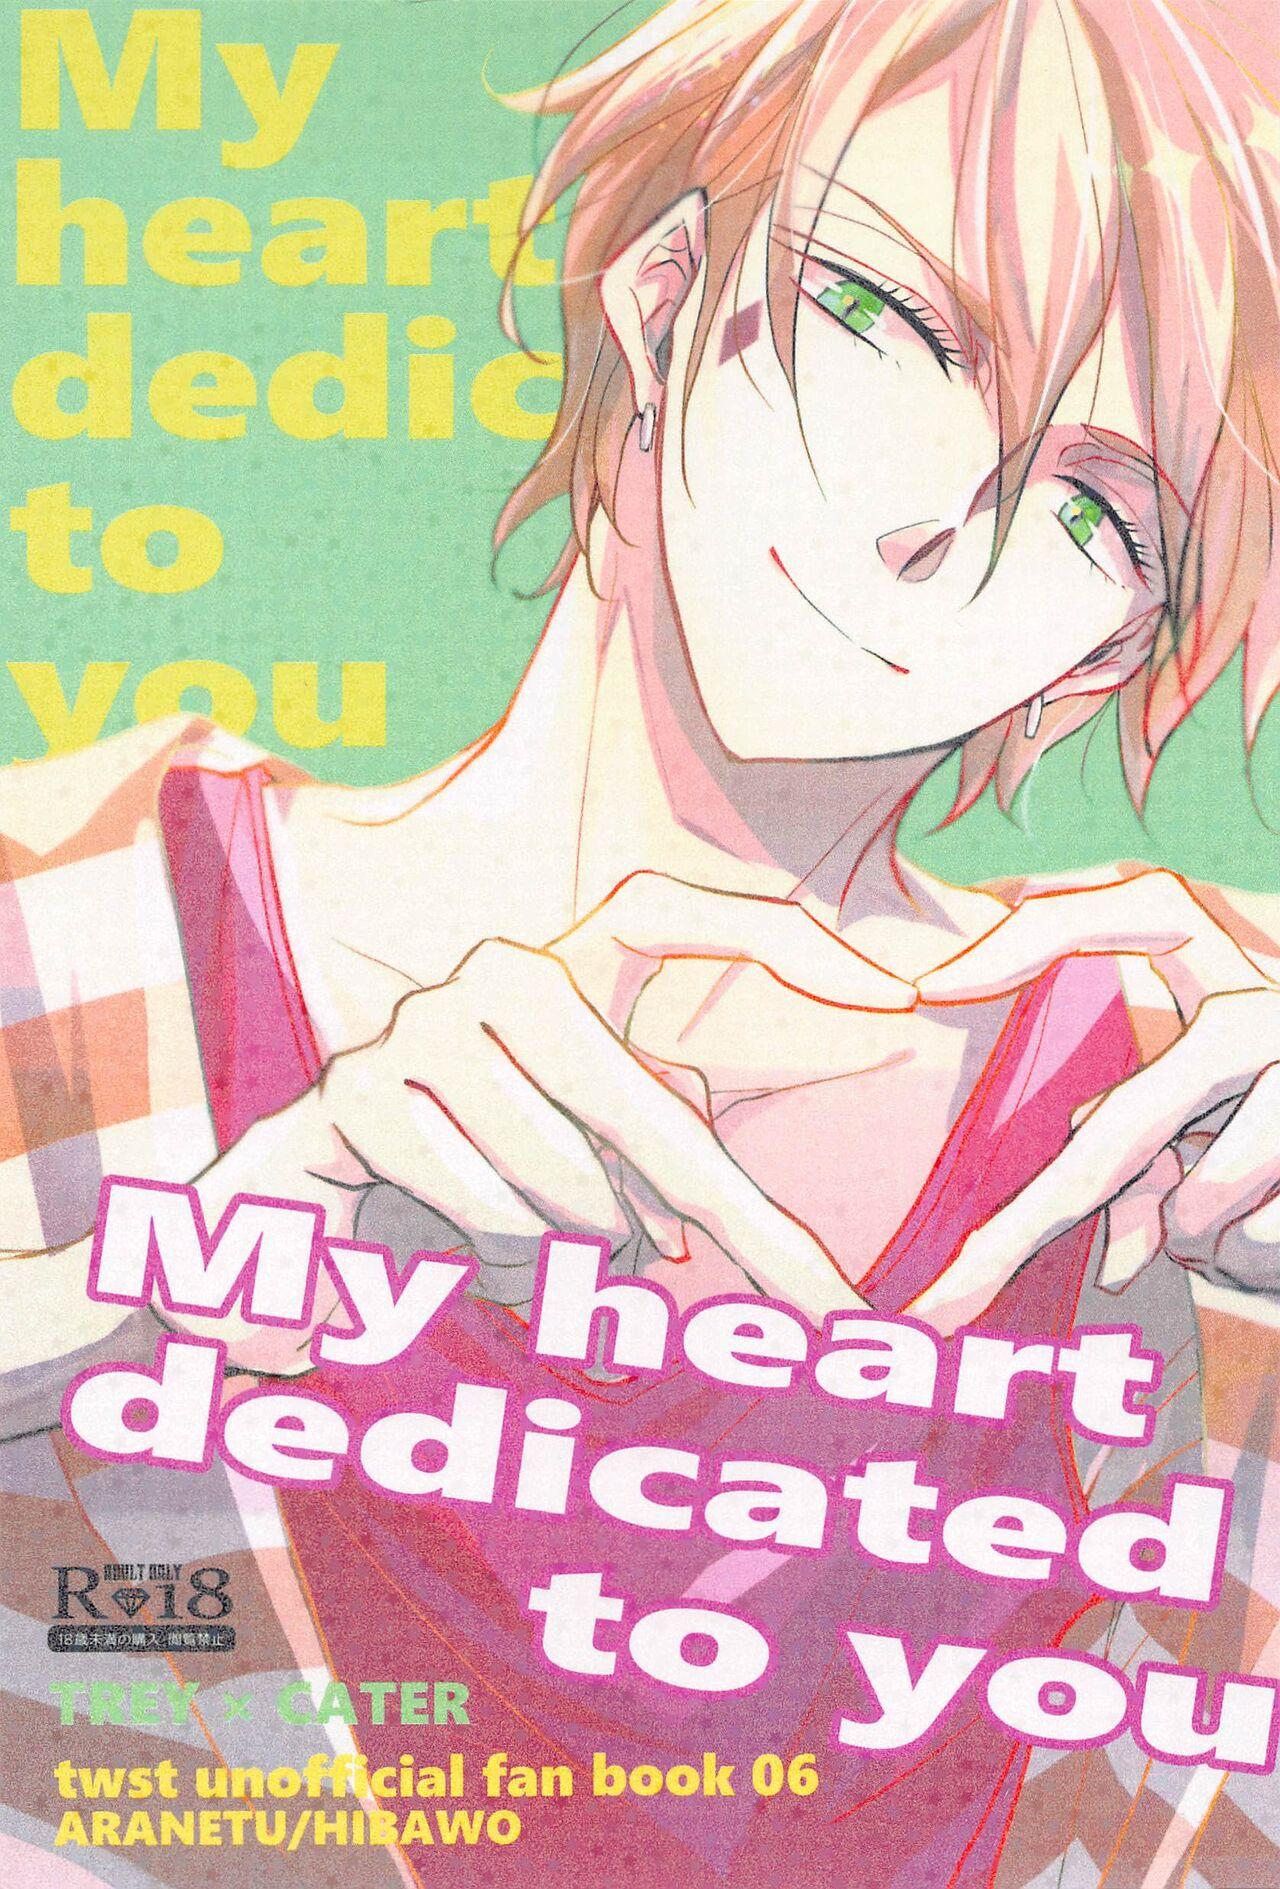 My heart dedicated to you [粗熱 (HIBAWO)] (ディズニーツイステッドワンダーランド) 0